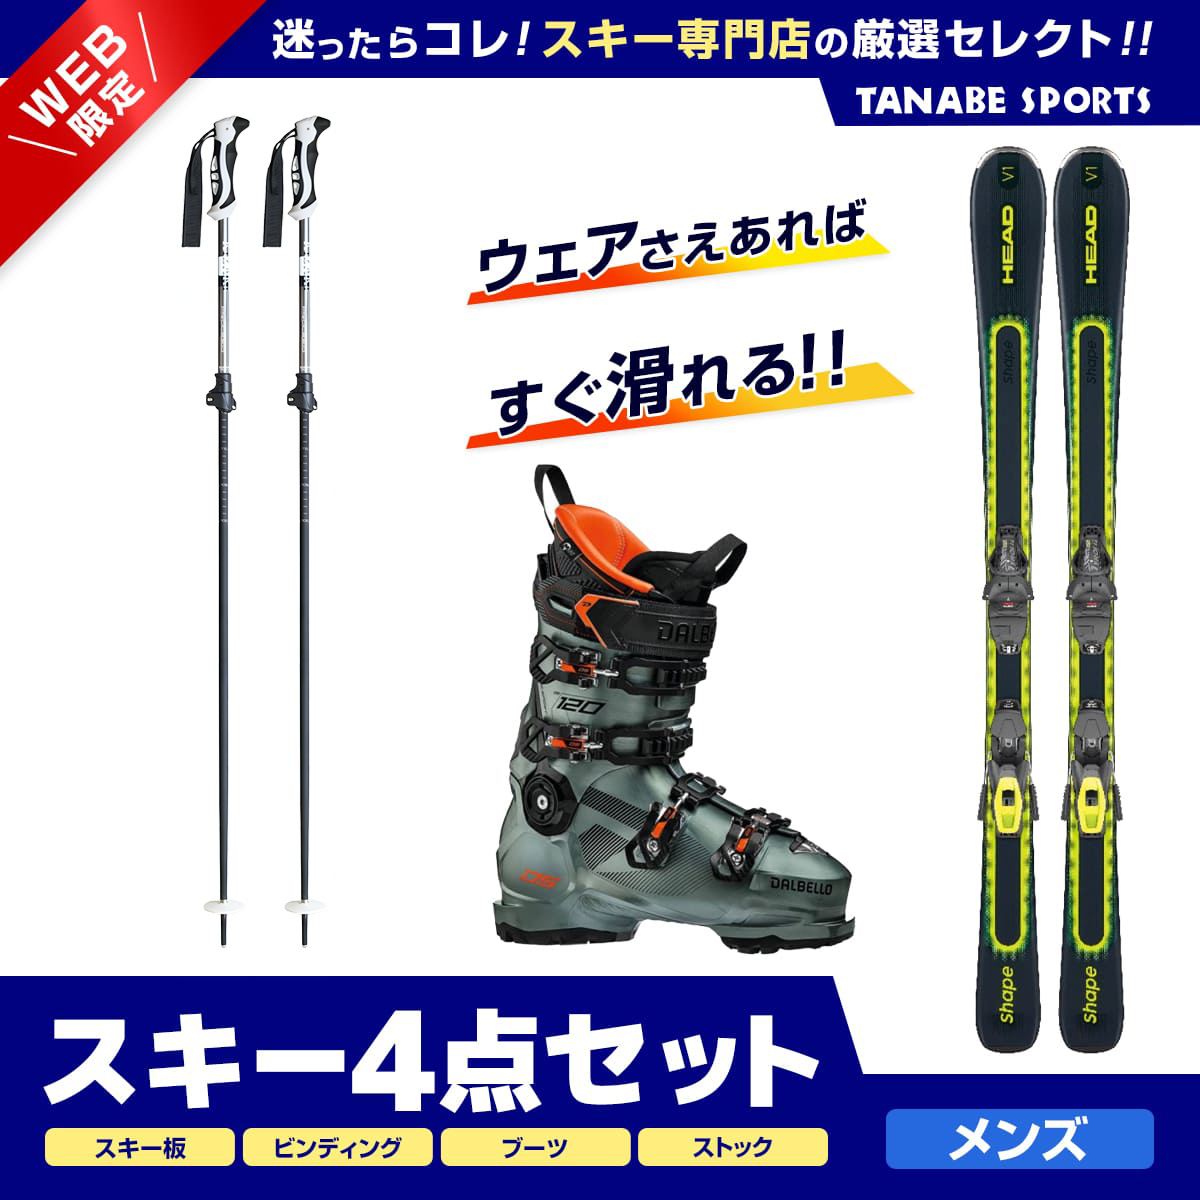 ♡KASTLE♡メンズ・レディース用♡スキー板150cm 4点セット♡ 憧れ